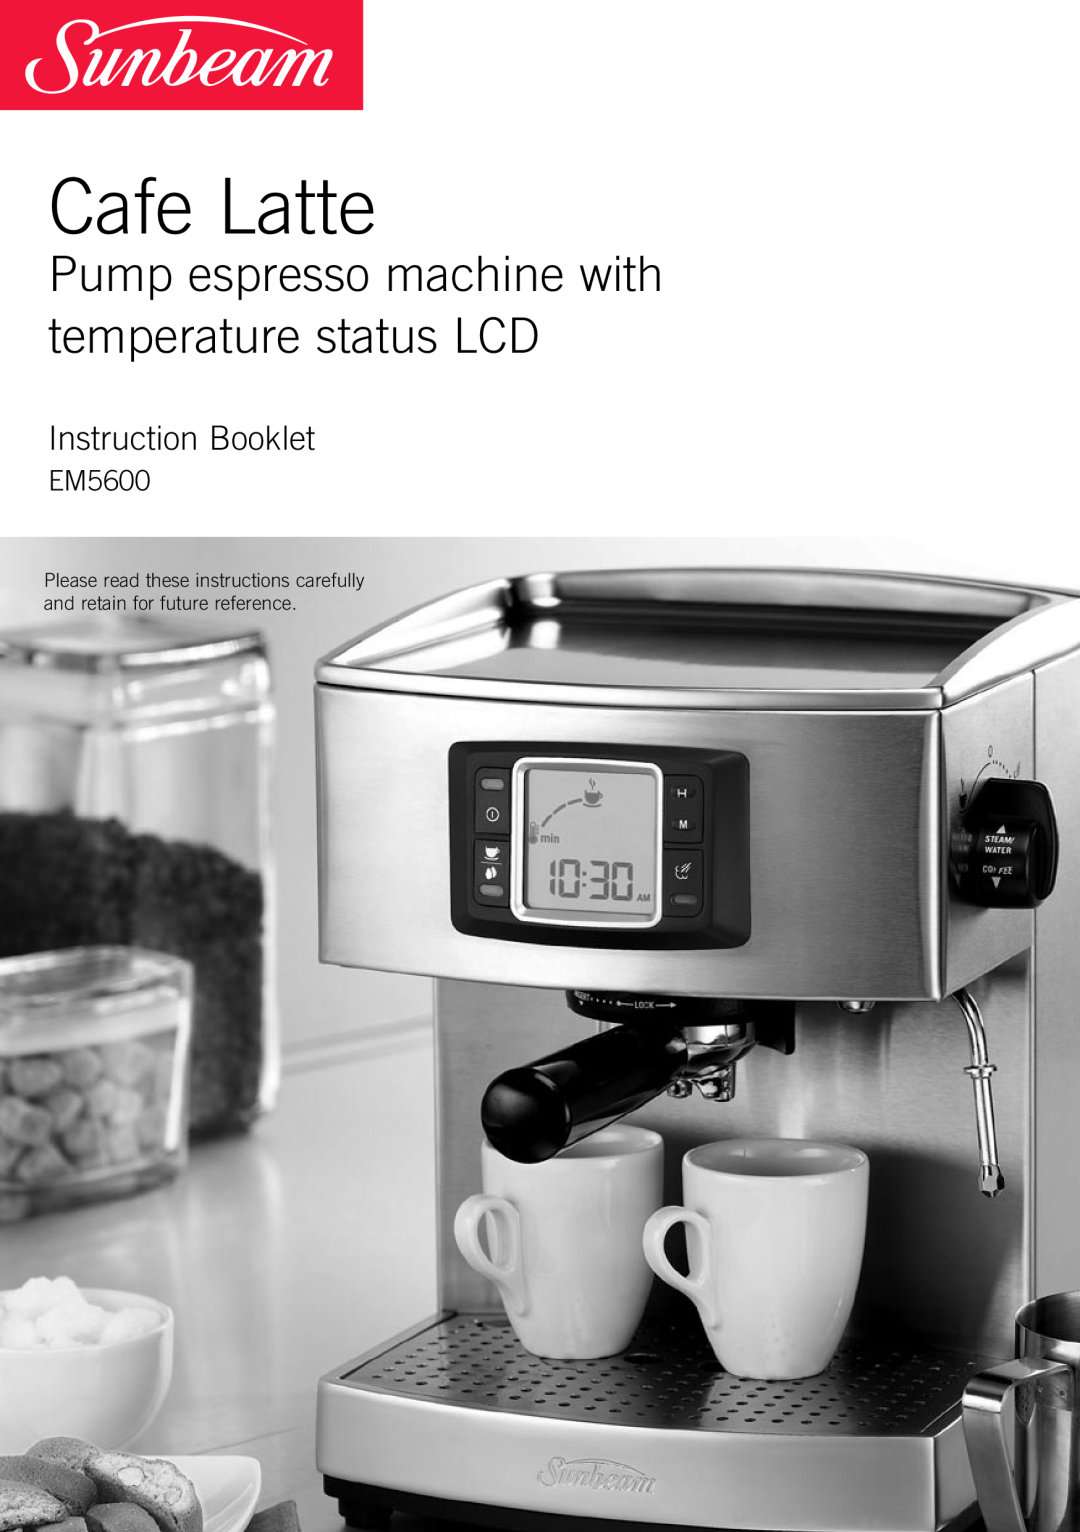 Sunbeam EM5600 manual Cafe Latte, Pump espresso machine with temperature status LCD, Instruction Booklet 